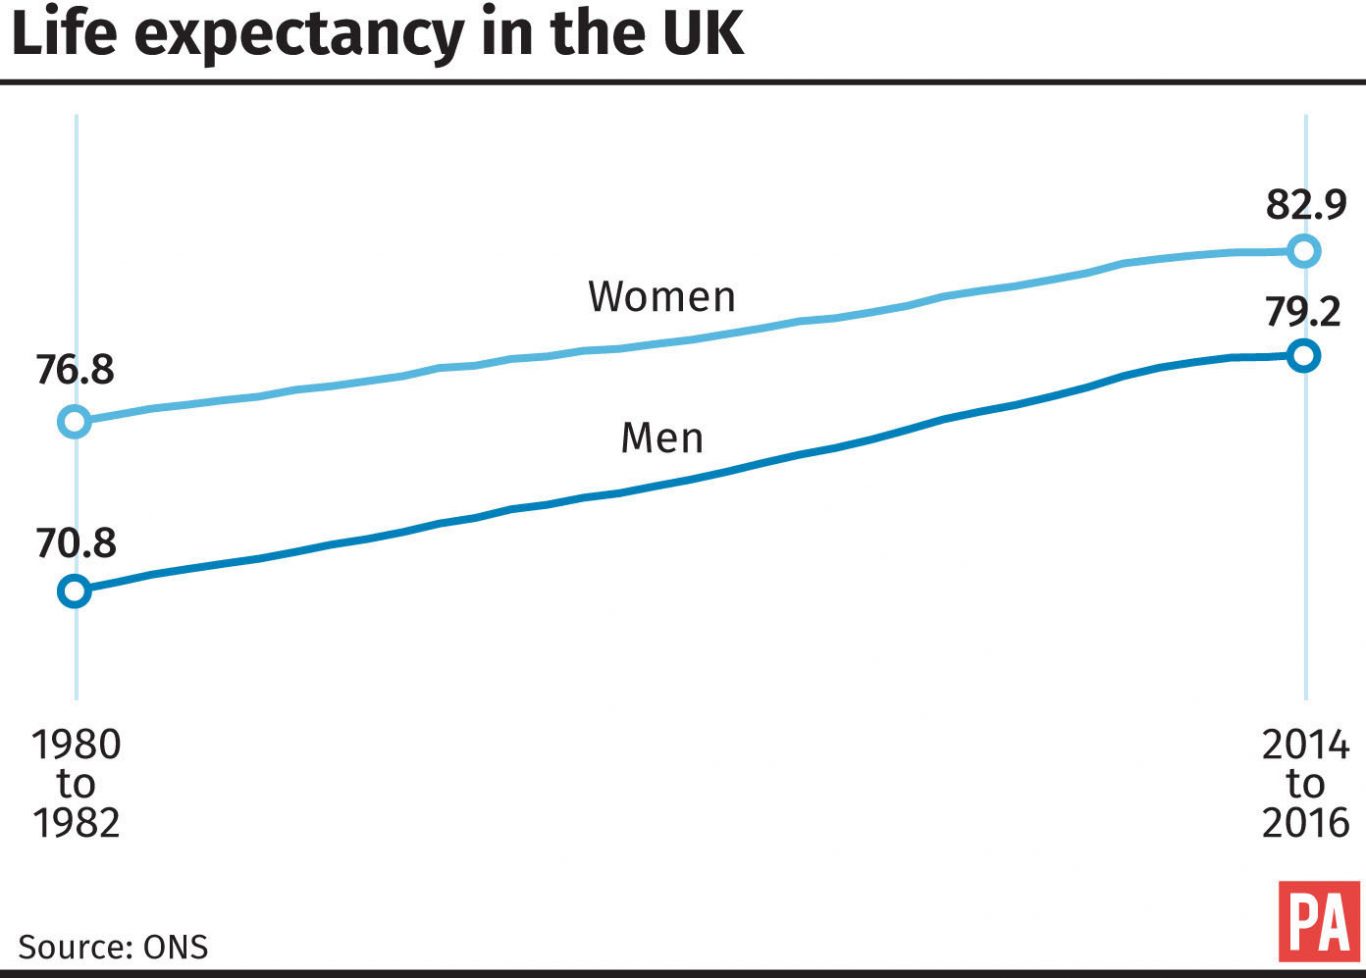 UK life expectancy increases slightly, although progress slows Bury Times